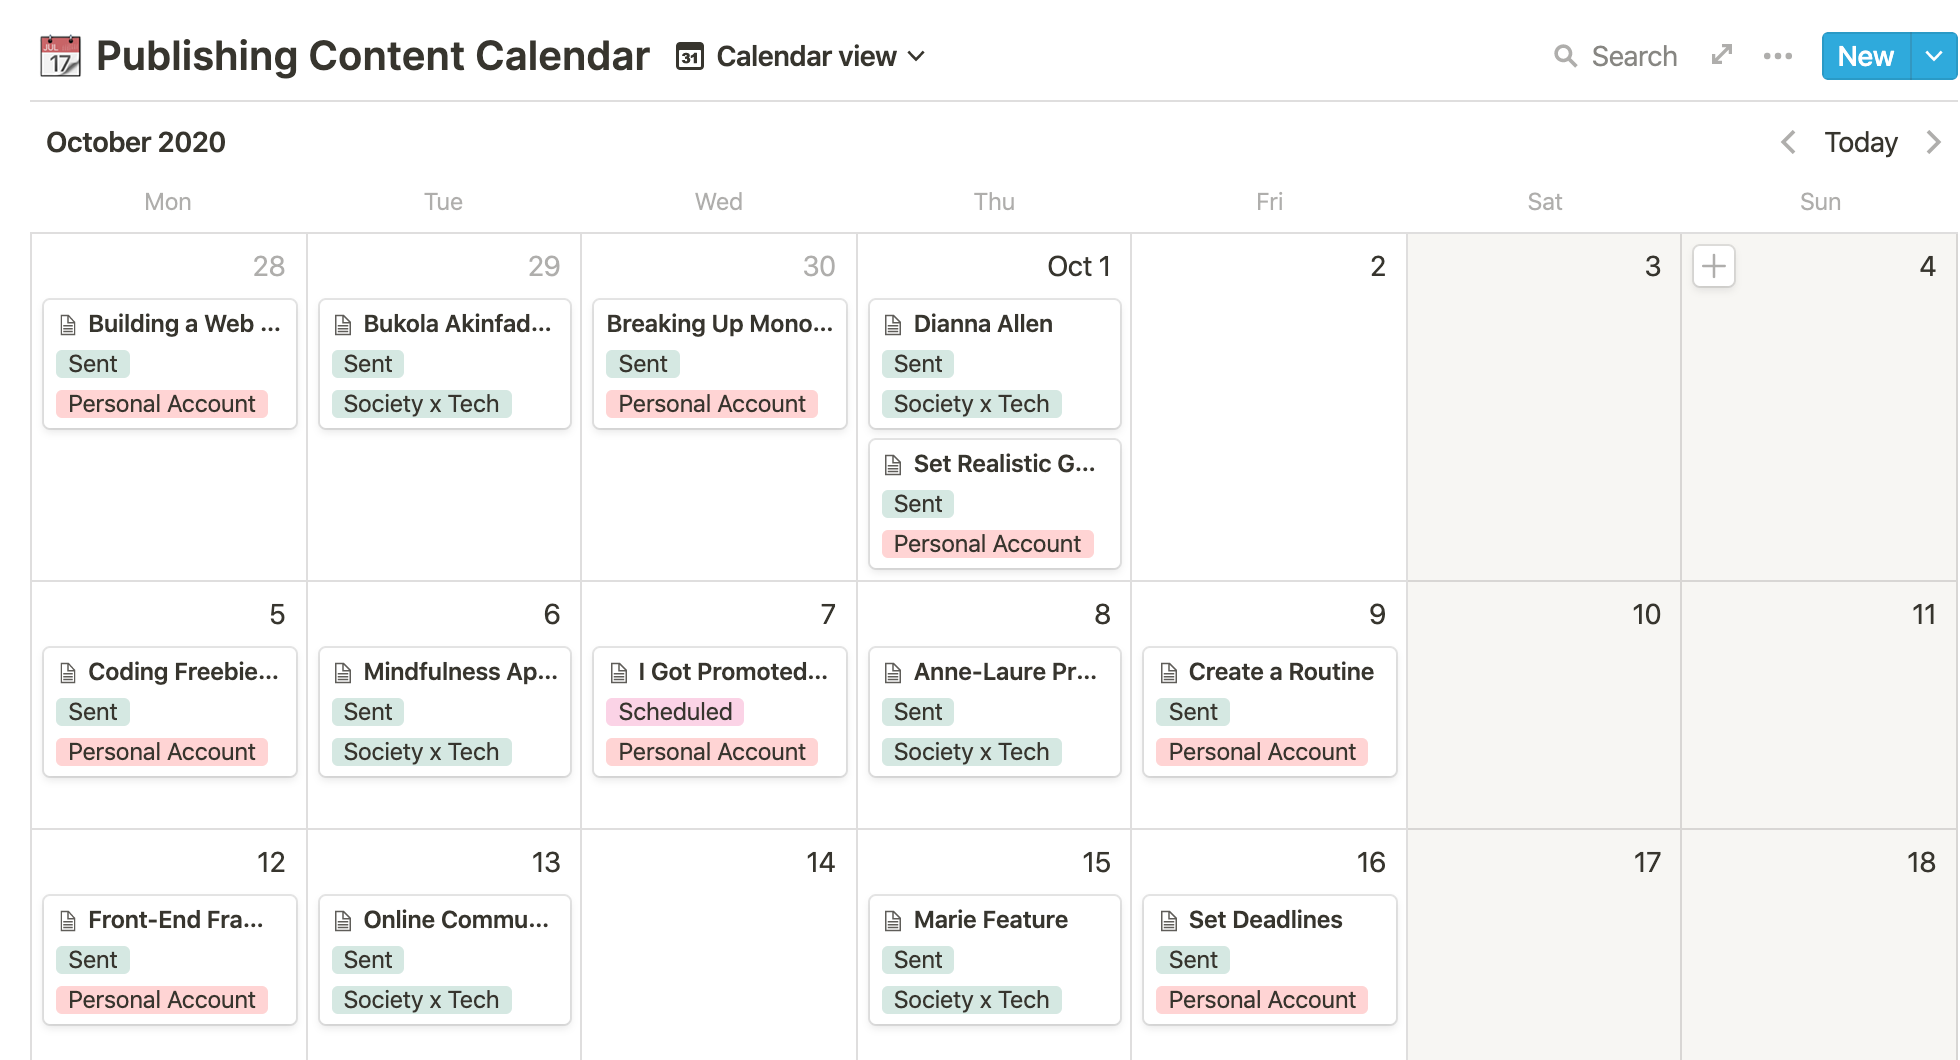 notion publishing content calendar, editorial calendar template, notion template